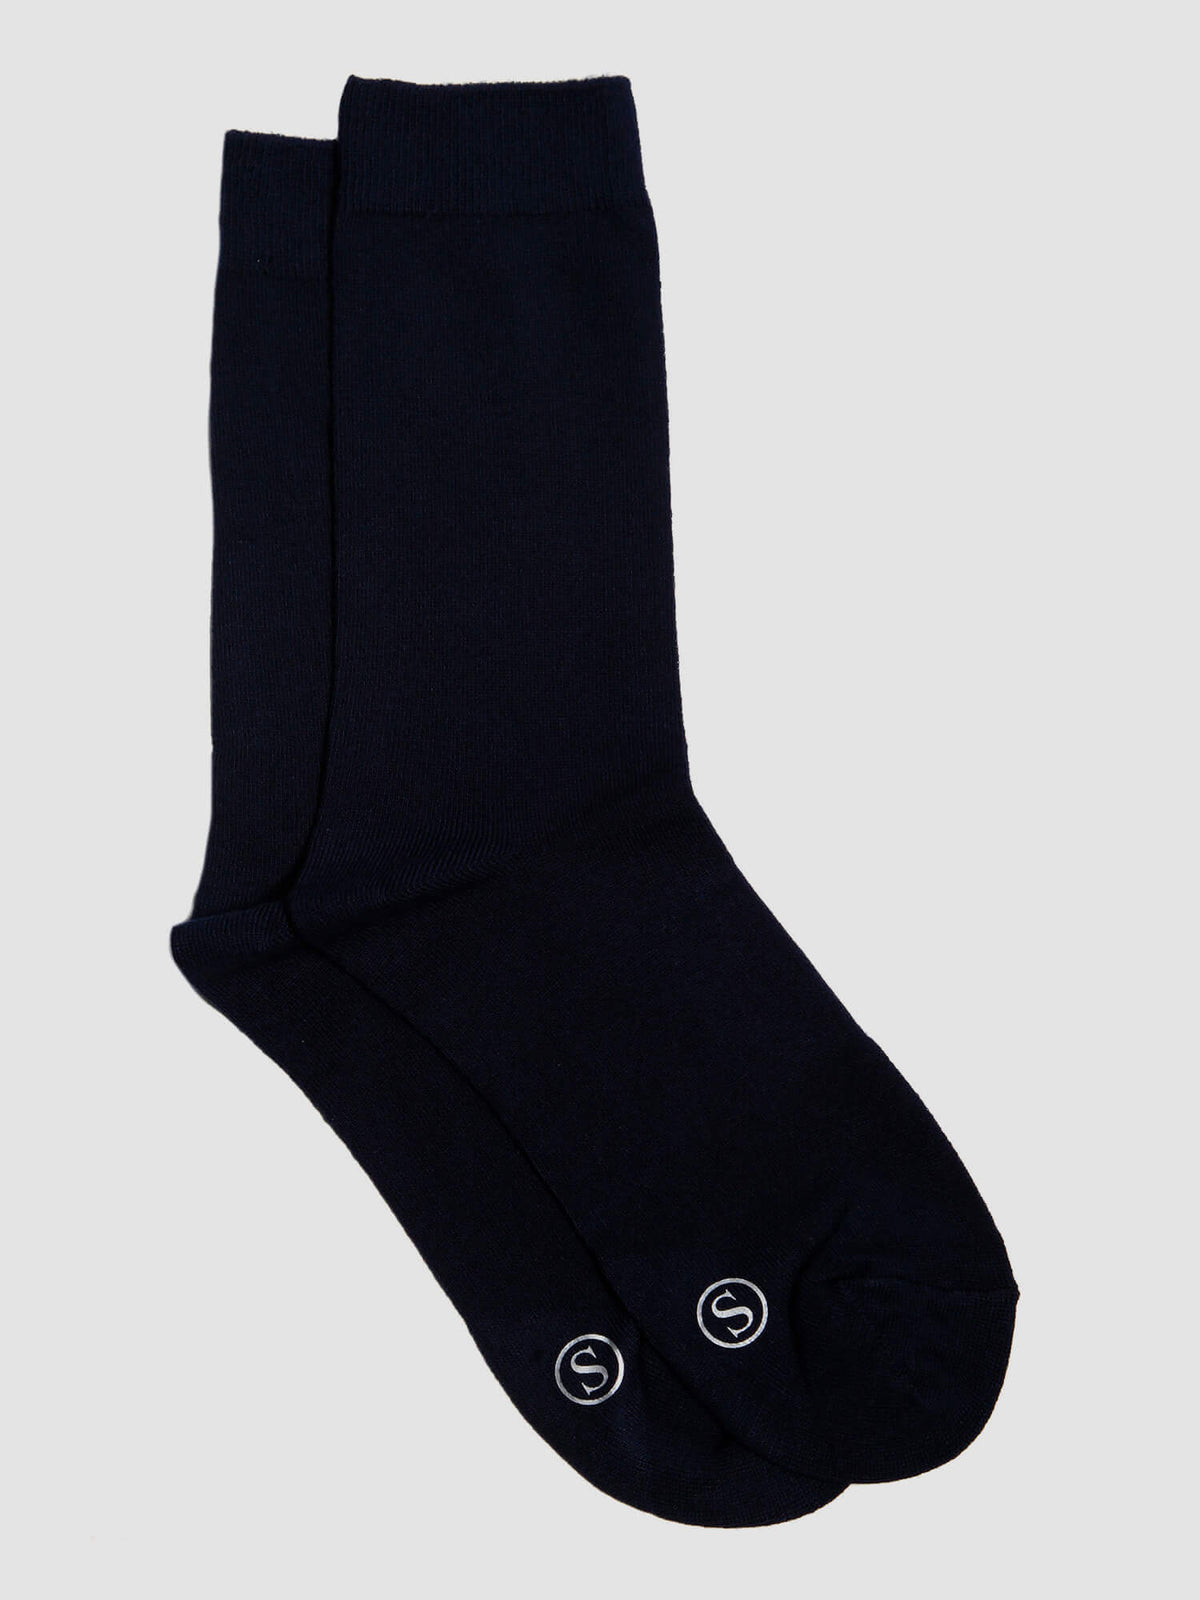 Simon de Winter - 2 Pack Ladies Supersoft Comfort Socks